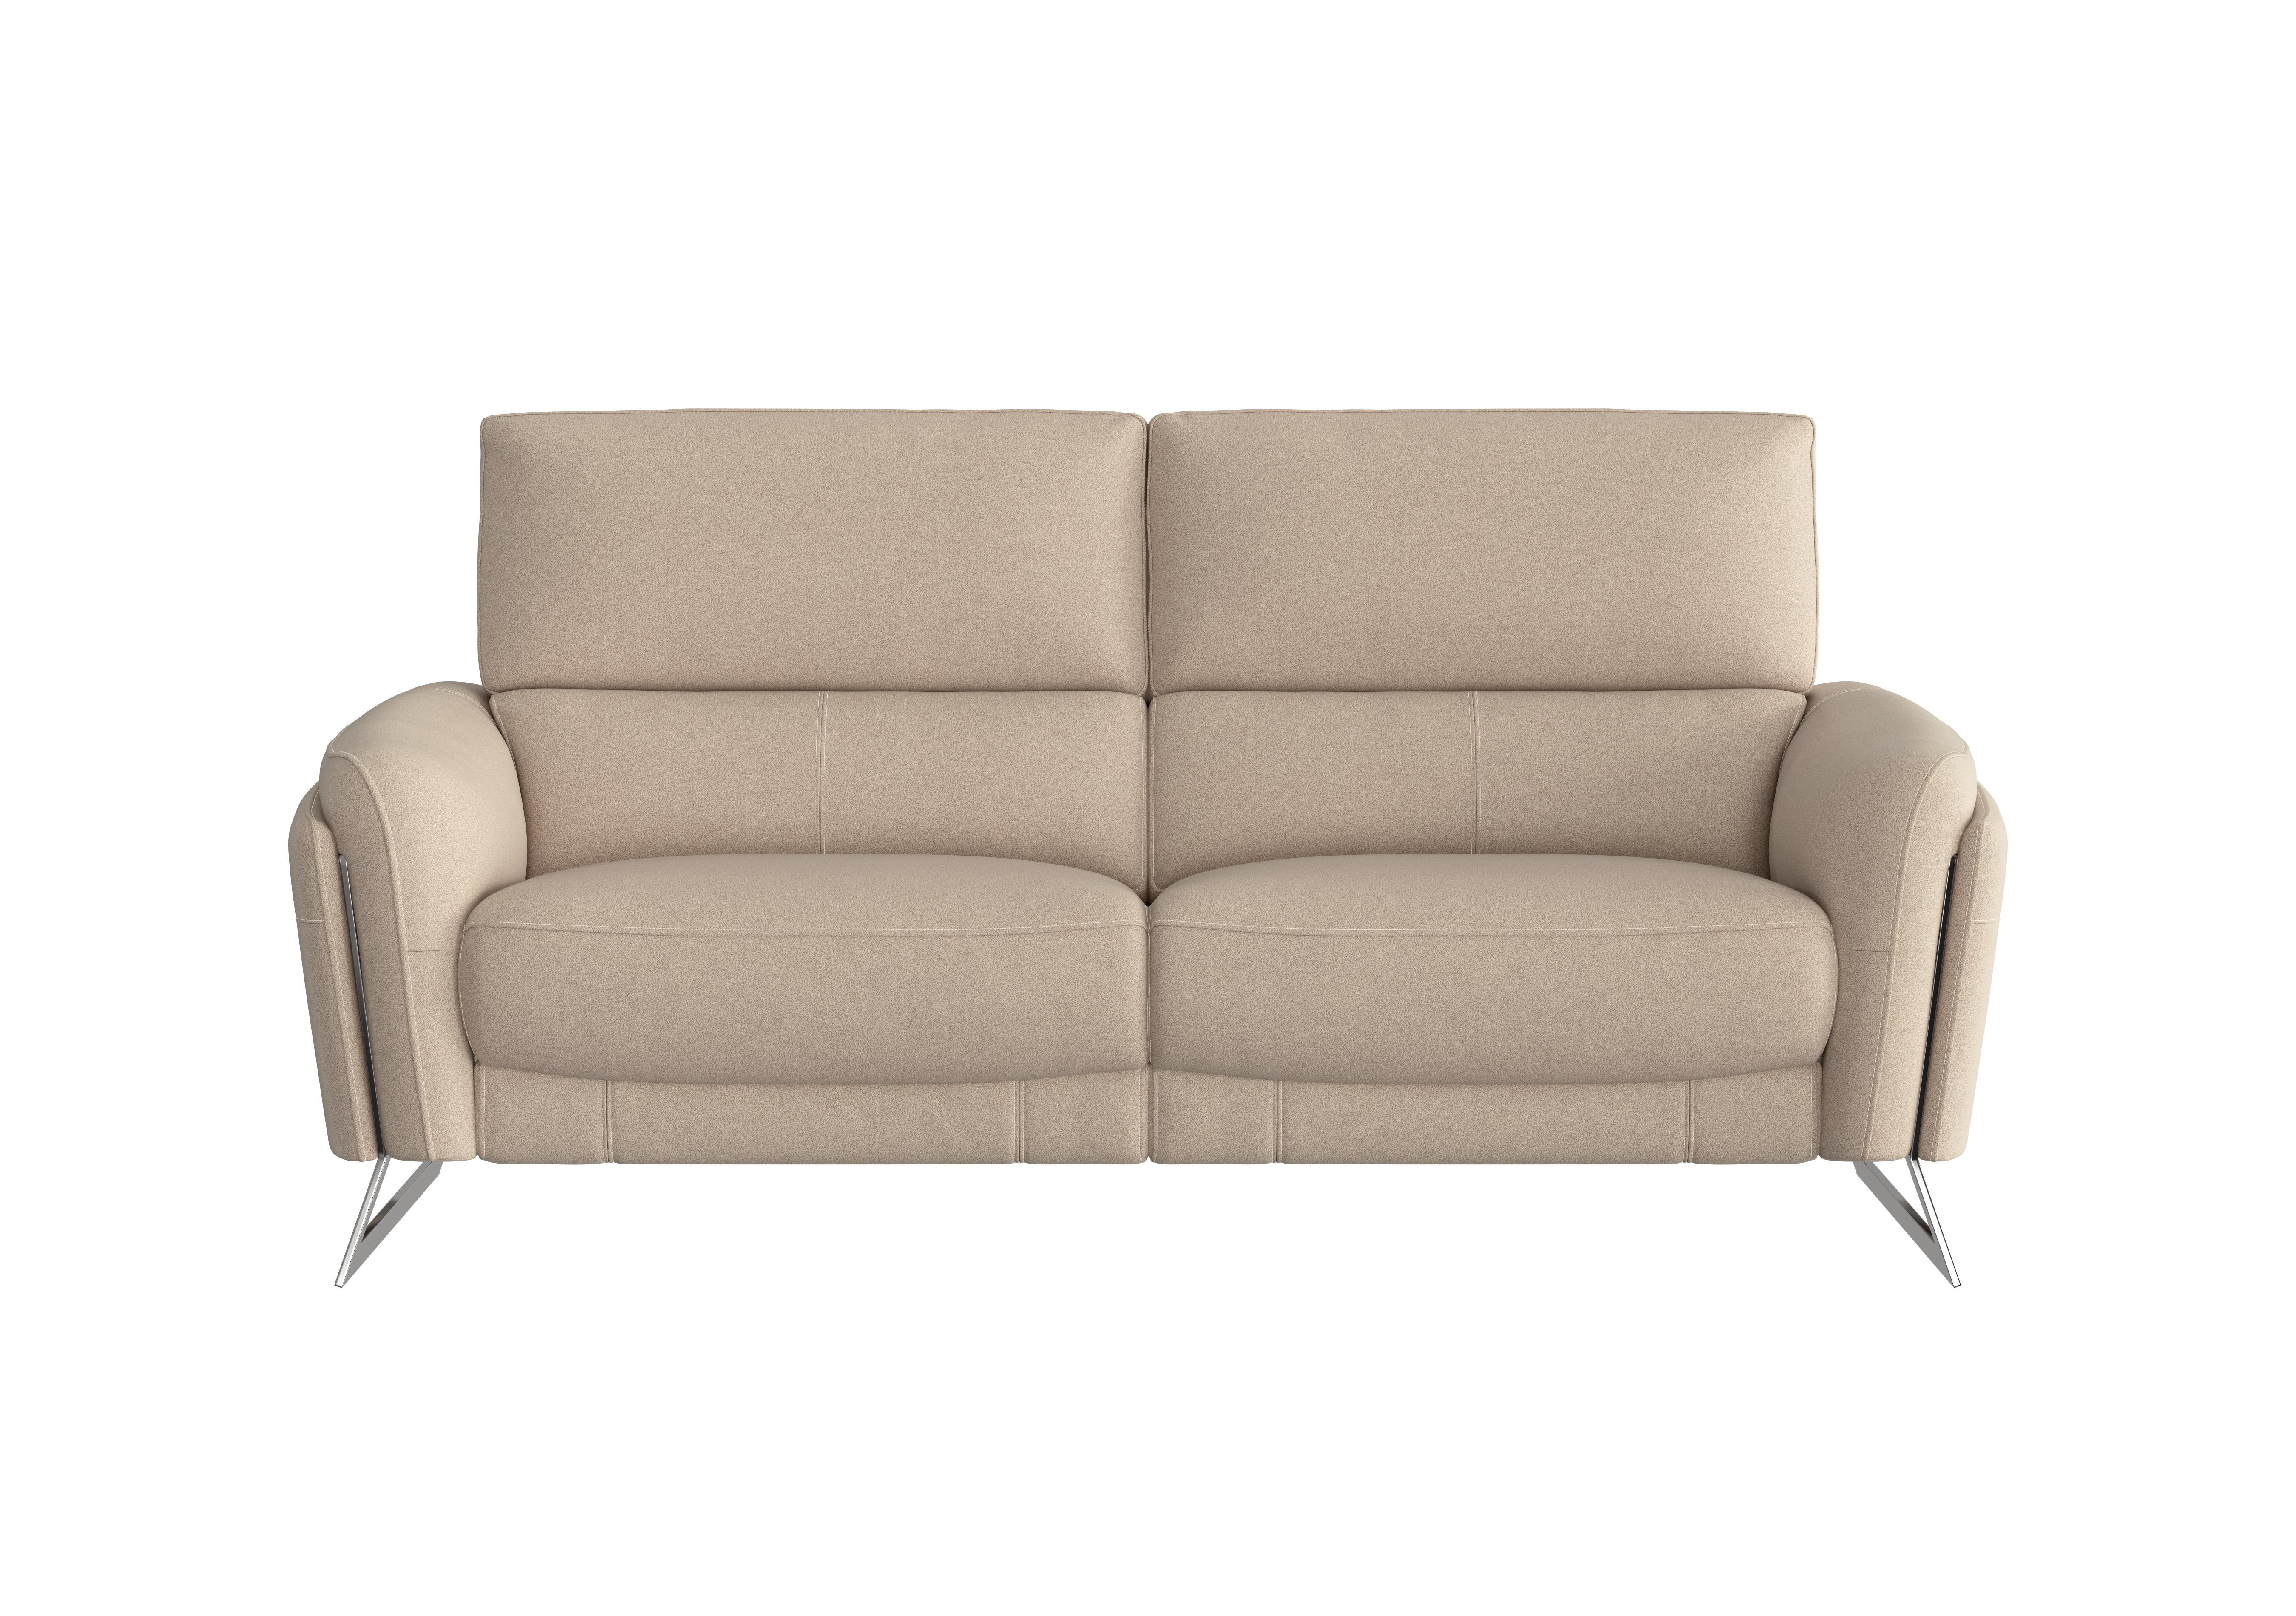 Amarilla 3 Seater Fabric Sofa in Bfa-Blj-R20 Bisque on Furniture Village